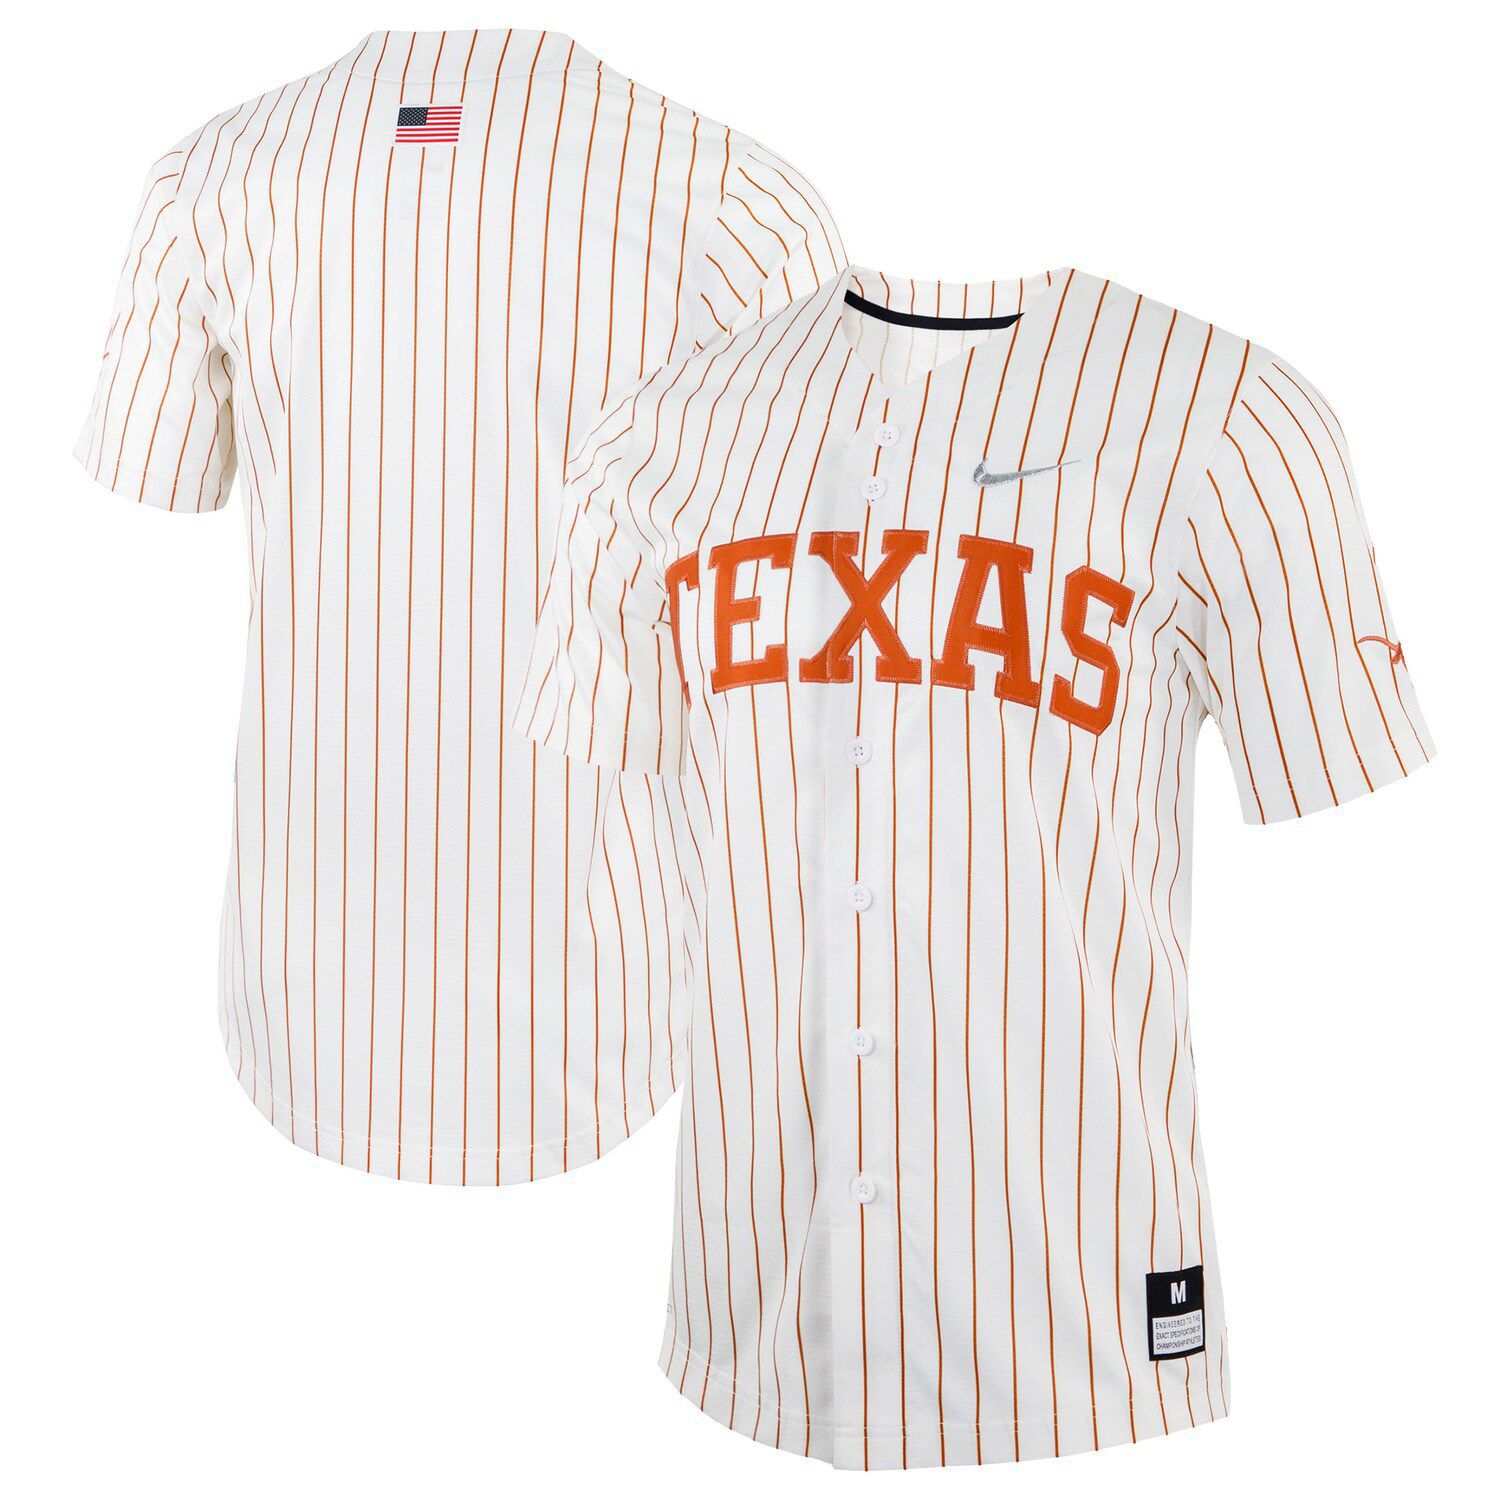 Men's adidas #21 White Washington Huskies Button-Up Baseball Jersey